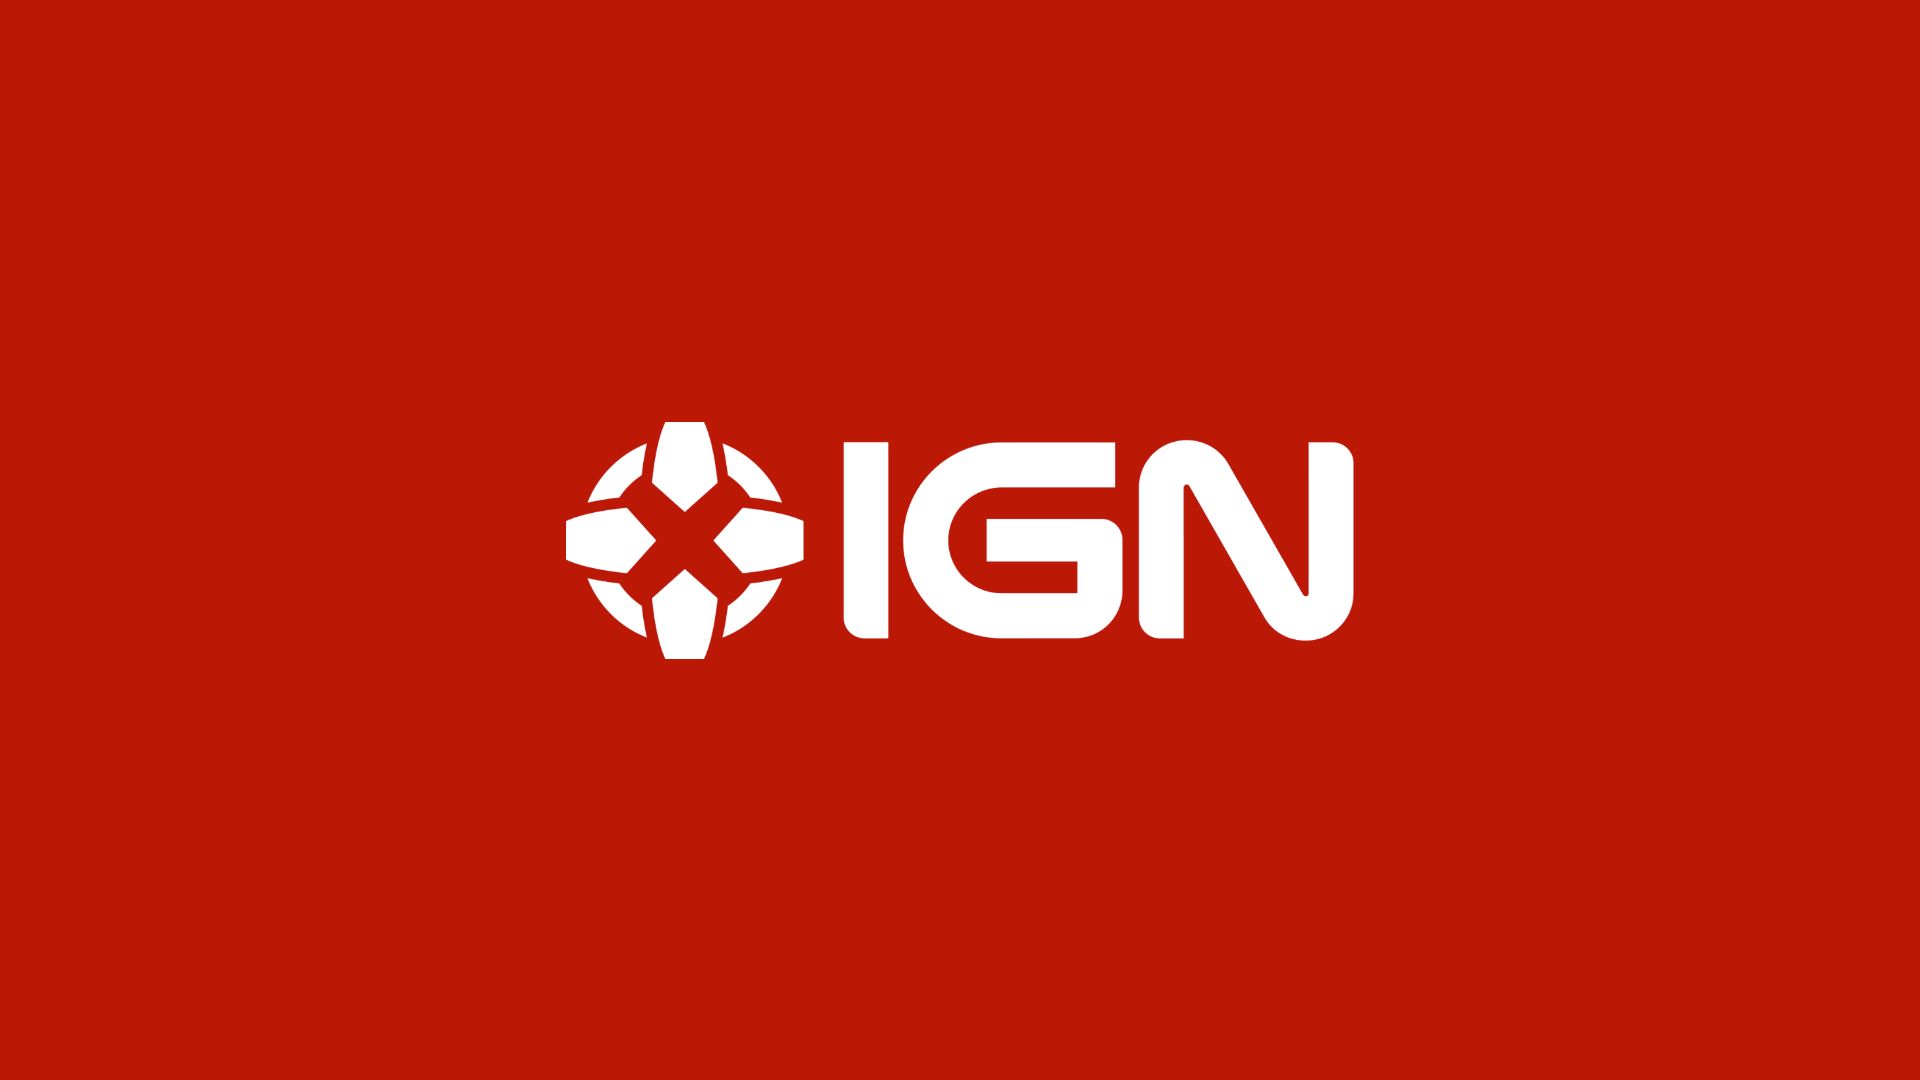 Xbox One X [Videos] - IGN